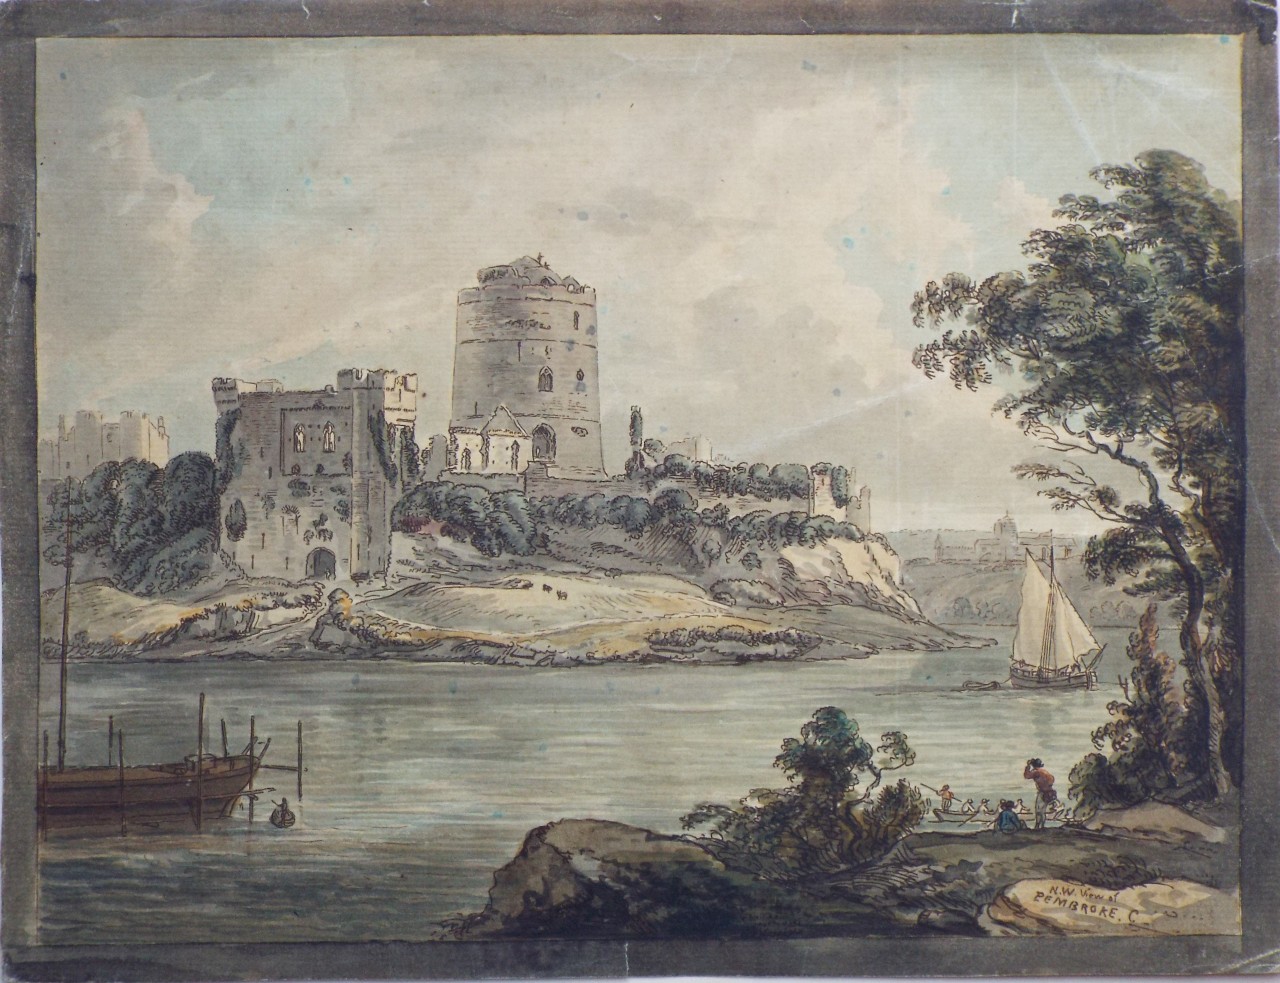 Aquatint - N. W. View of Pembroke Castle - Sandby